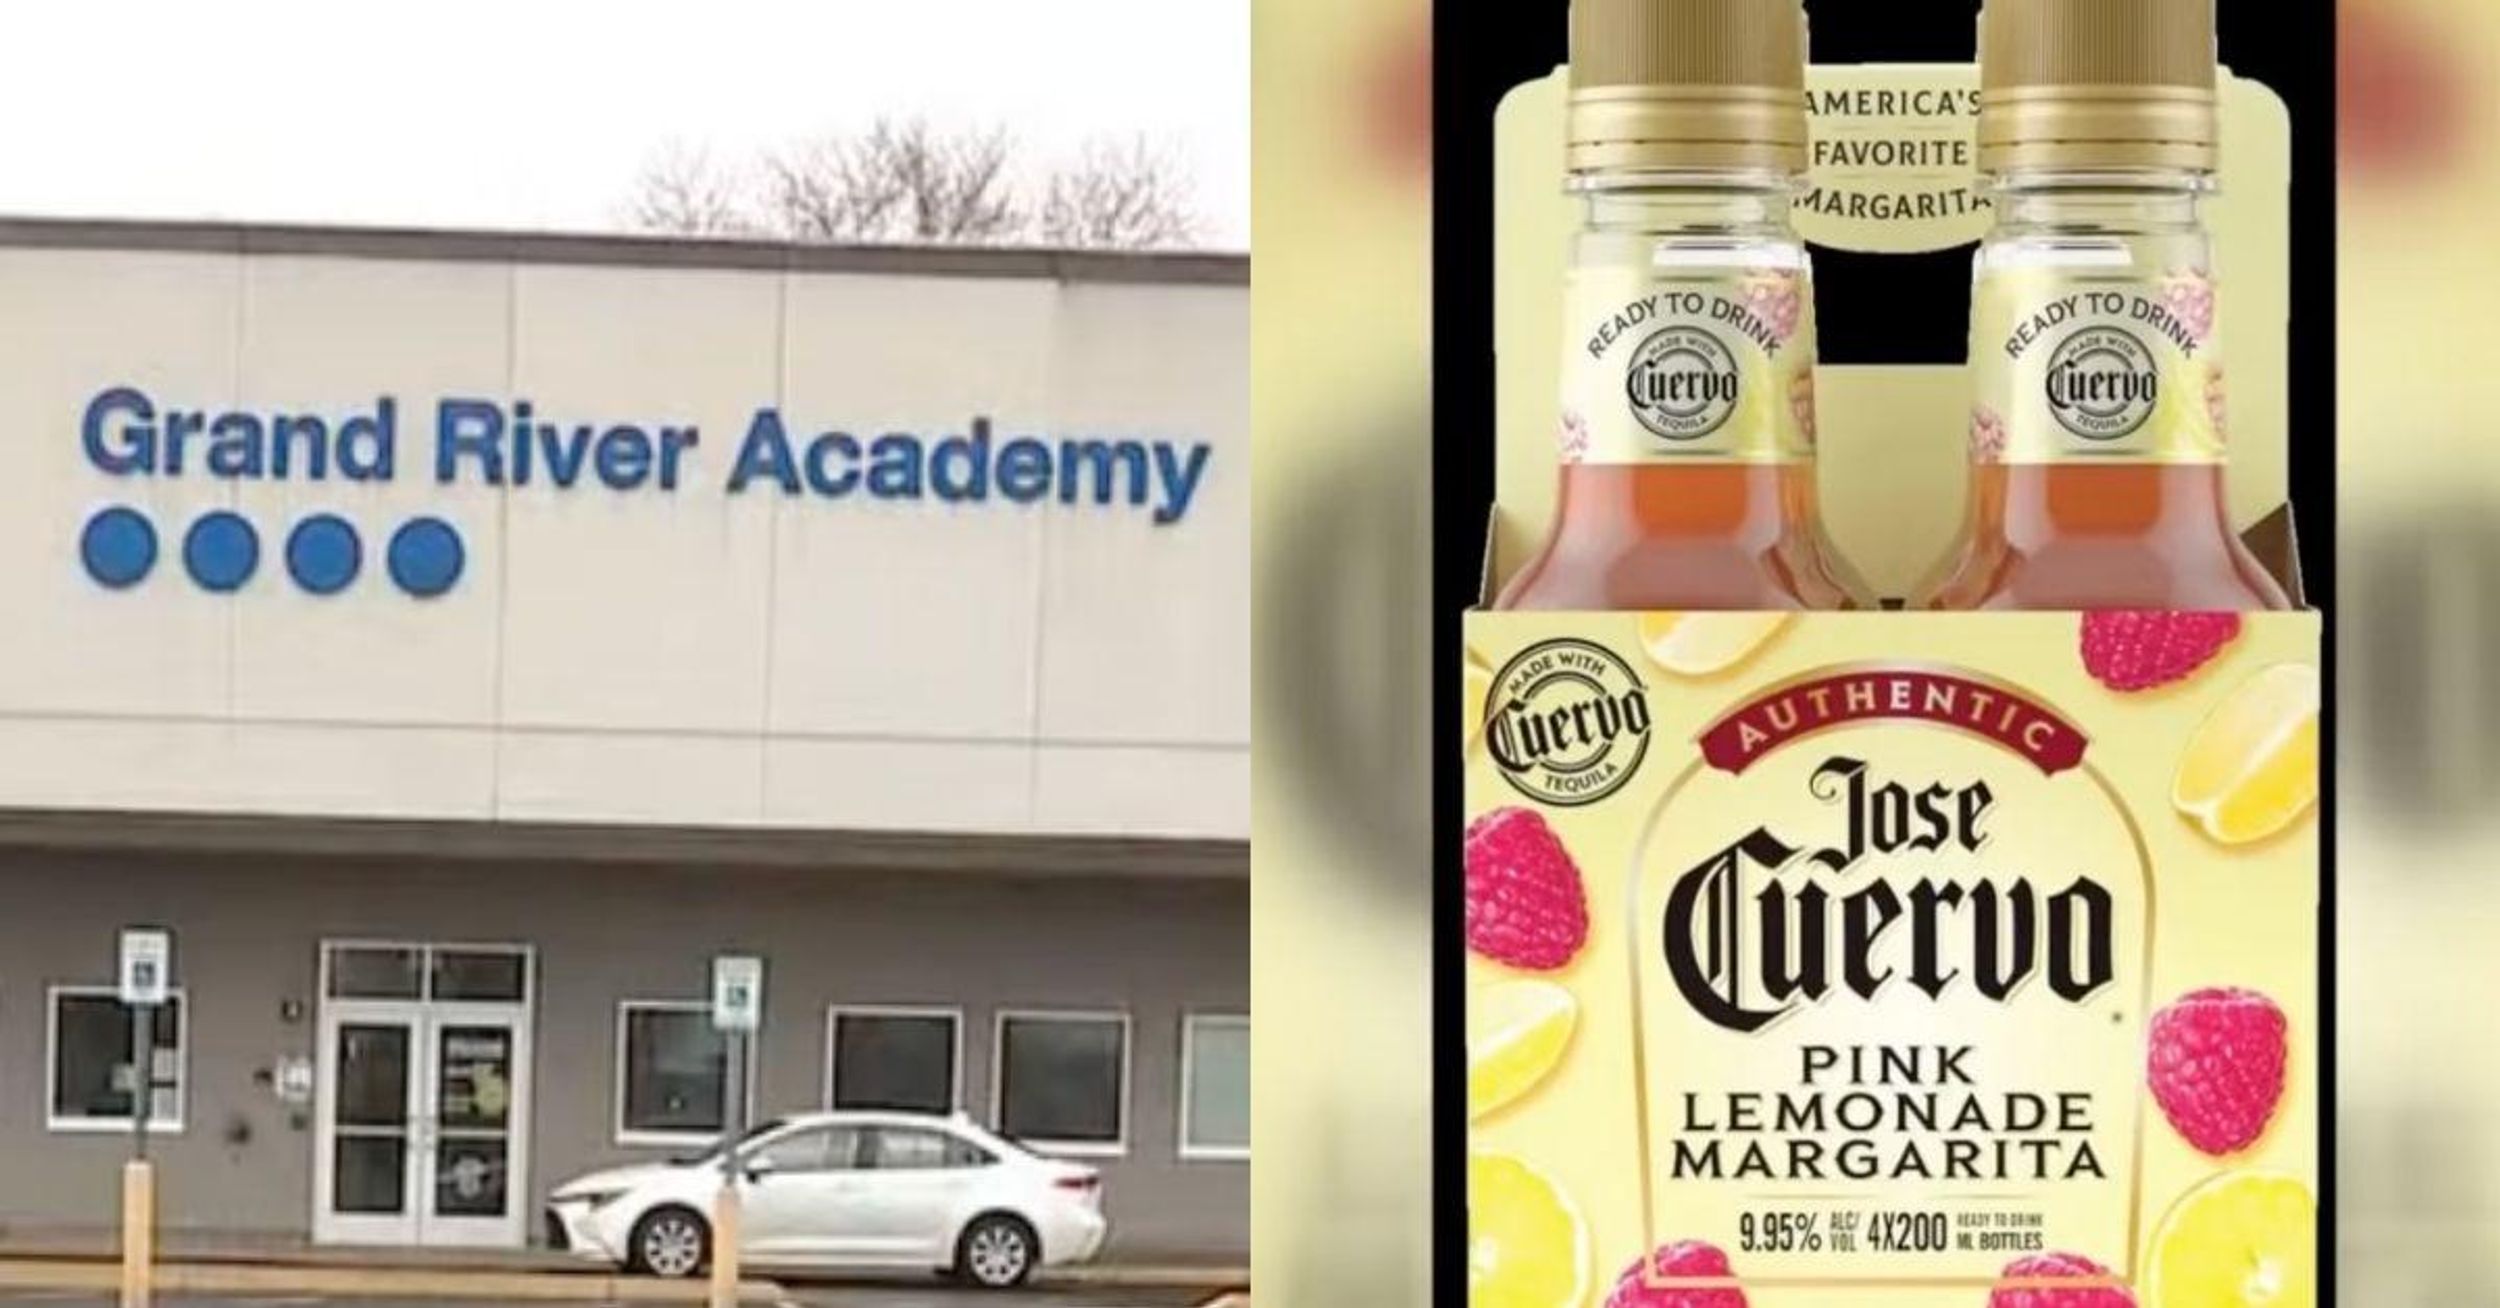 Michigan Parents Outraged After Kindergartner Gets Classmates Tipsy On Margaritas During Snack Time